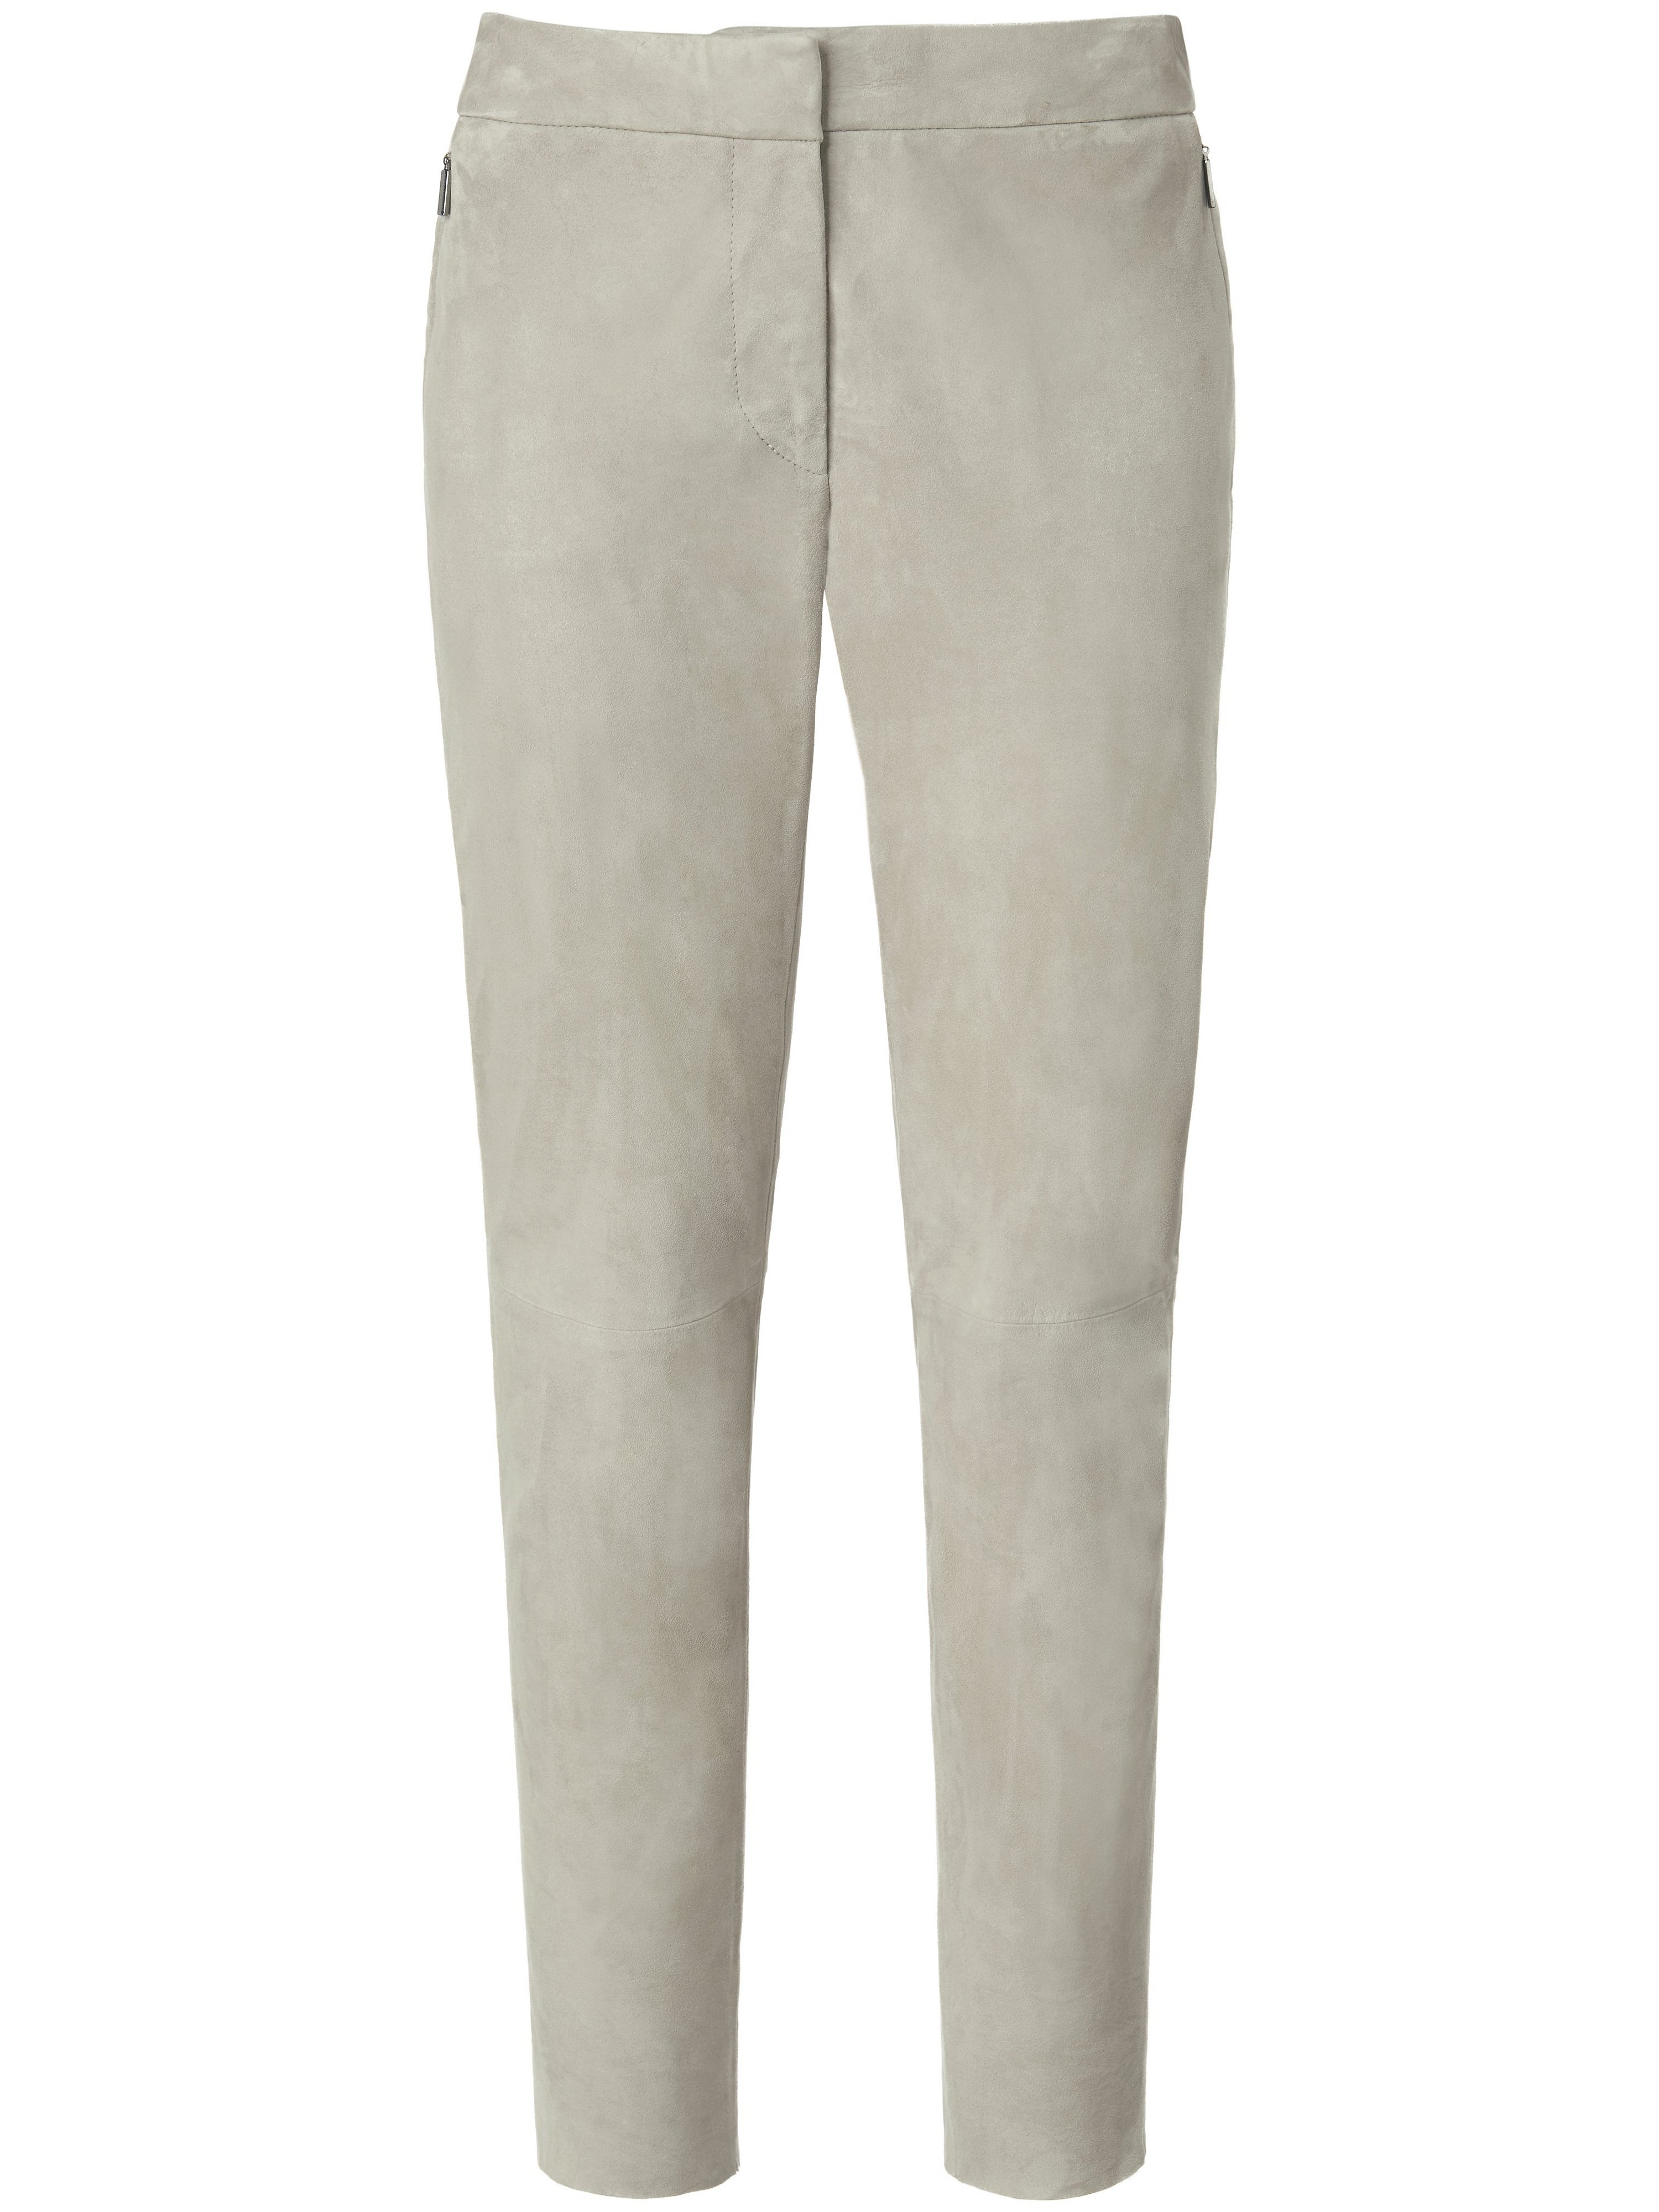 Le pantalon cuir velours chevreau  Fadenmeister Berlin beige taille 38